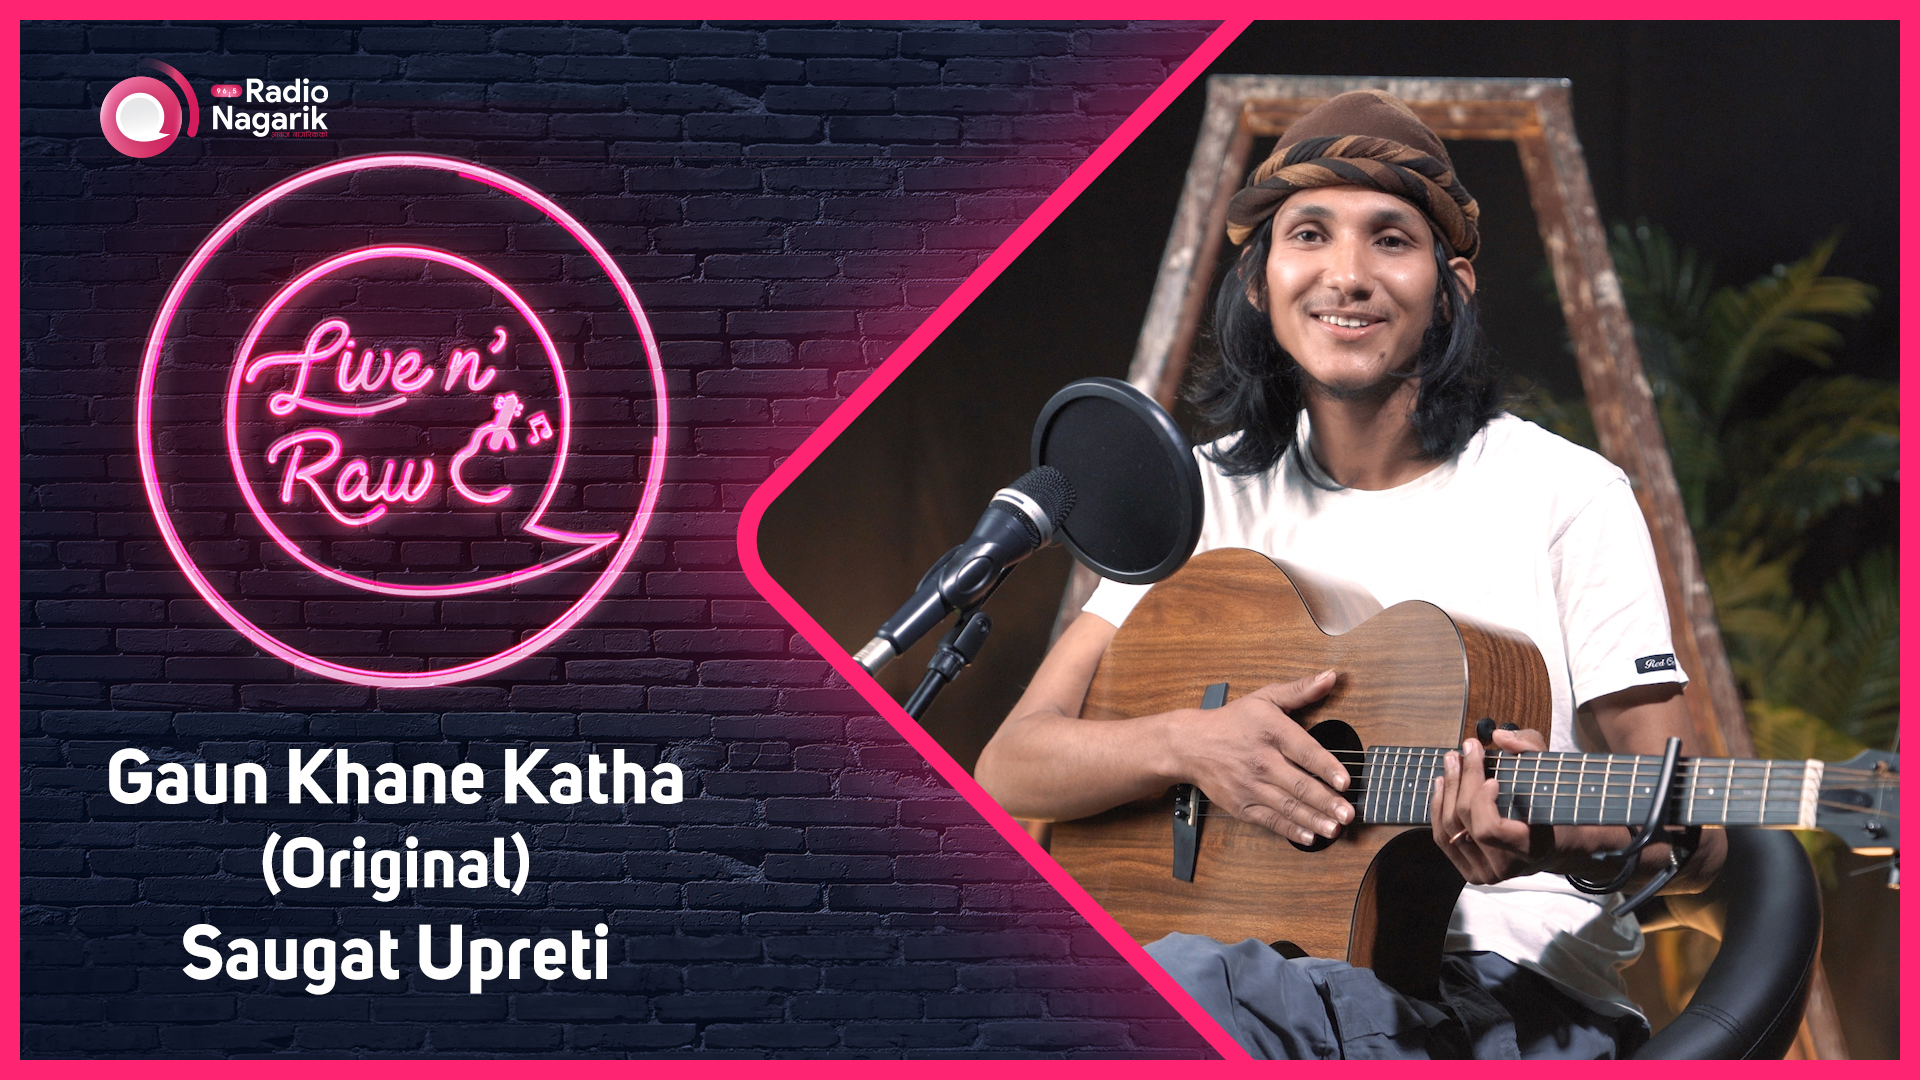 KAALA (Saugat Upreti) - Gaun khane katha  (Original) / Live N' Raw